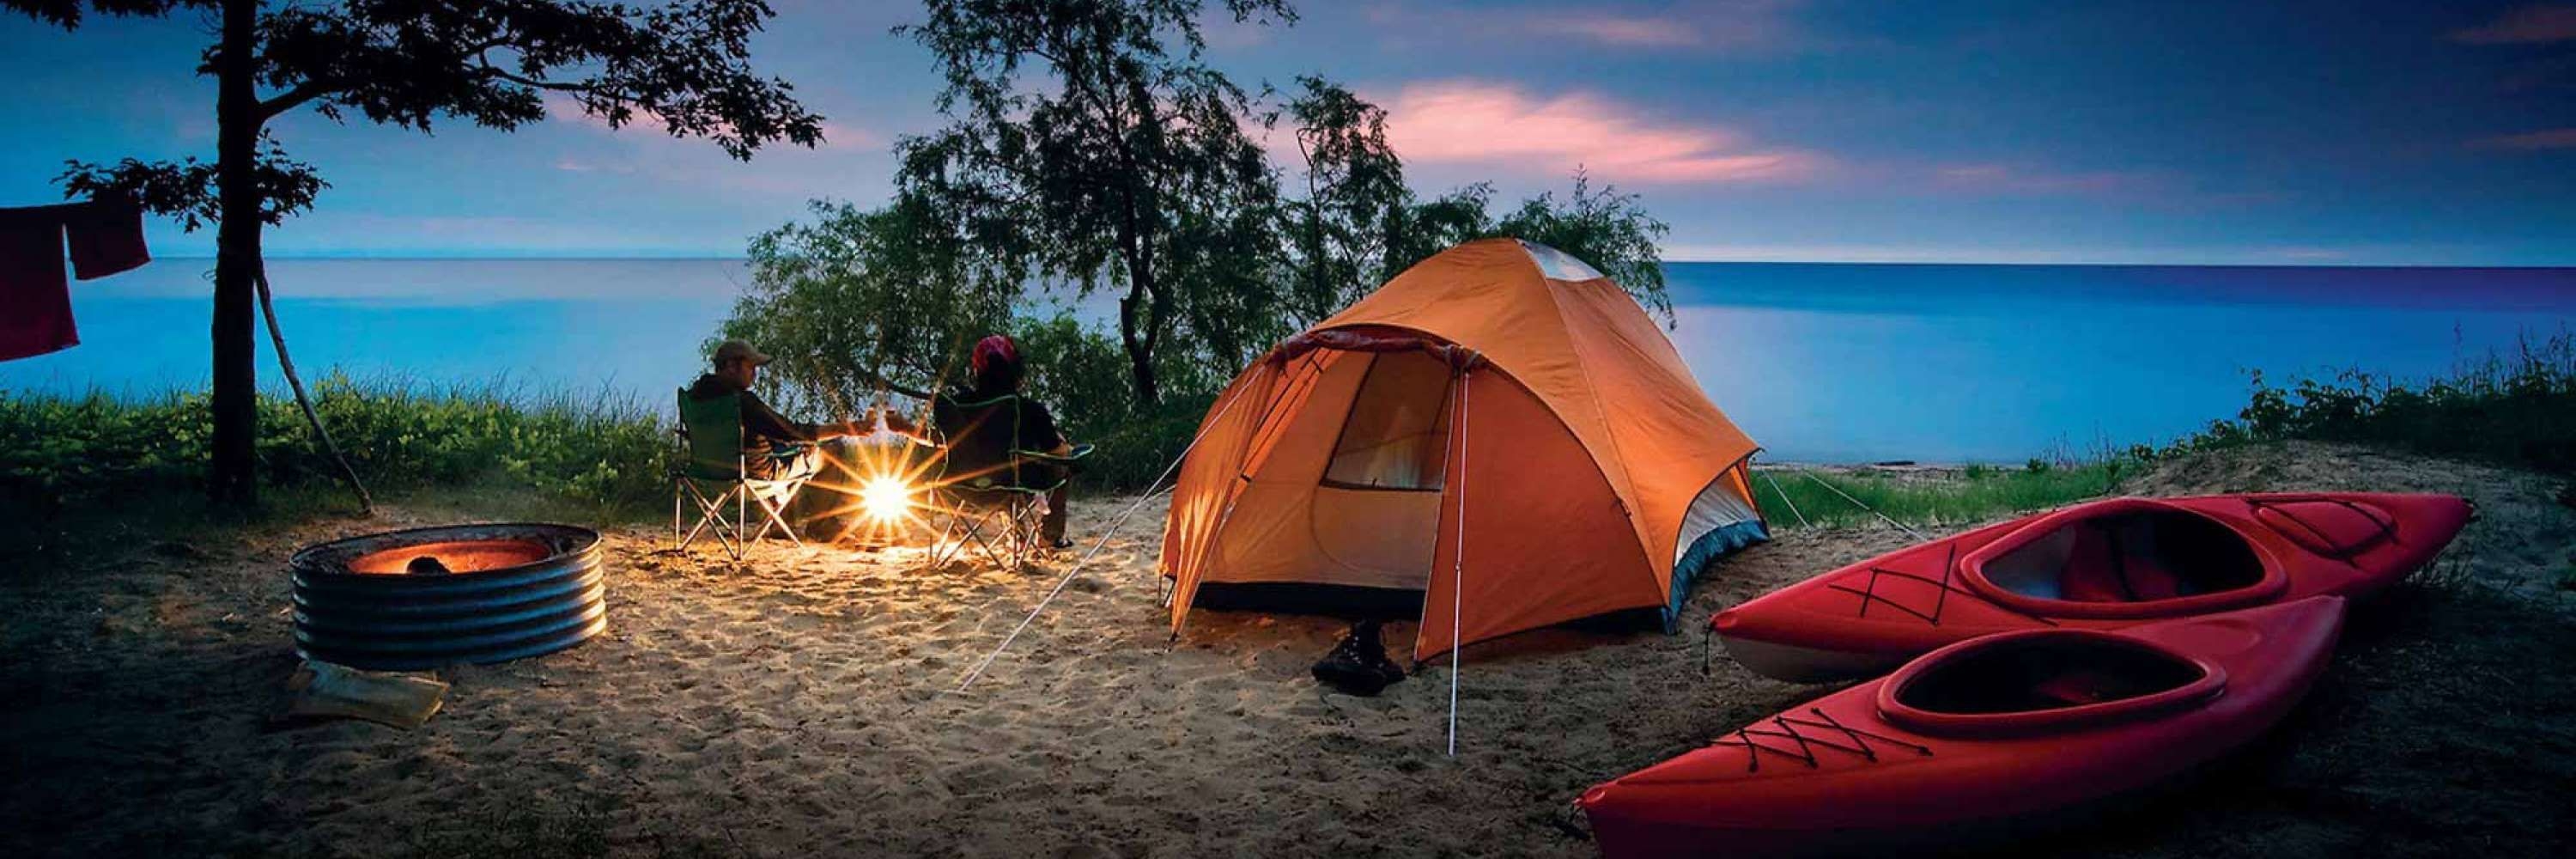 Tourist camping. Поляна Увильды кемпинг. Палатка Camping Tent. Увильды кемпинг с палатками. Глэмпинг Увильды.